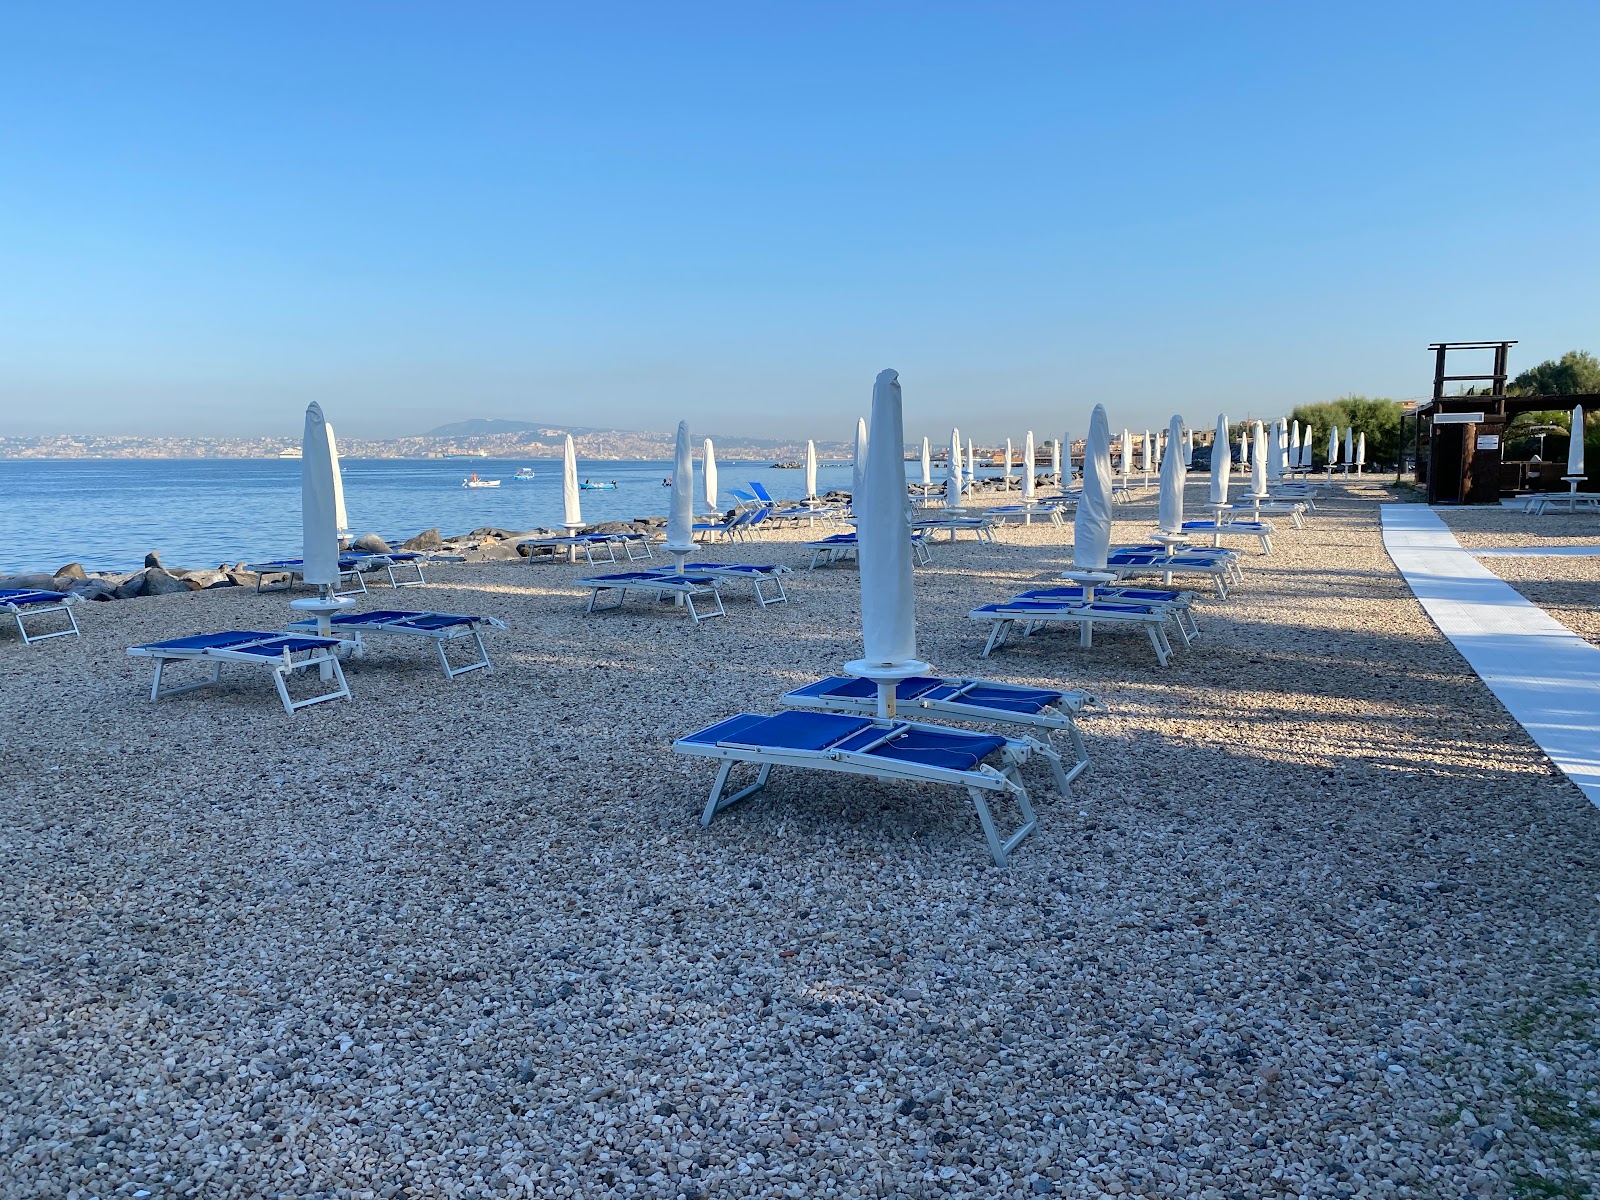 Spiaggia di Punta Quattroventi'in fotoğrafı geniş plaj ile birlikte